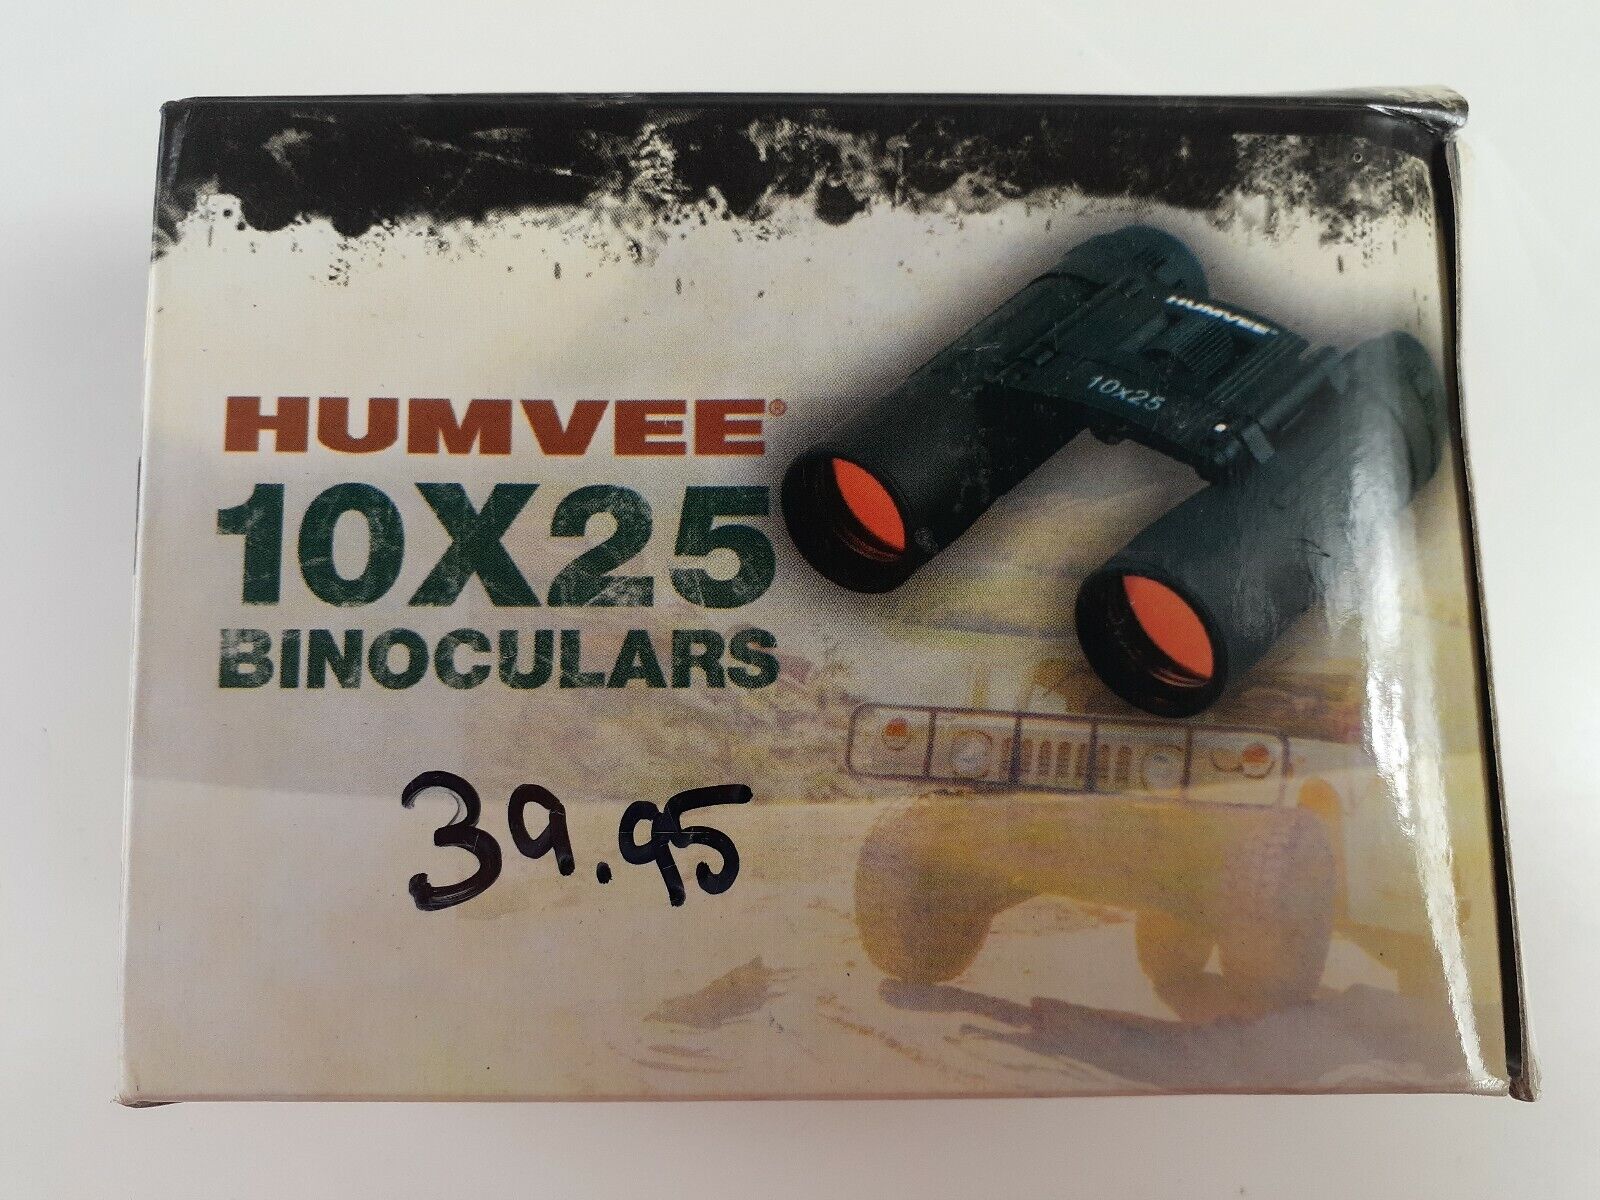 Humvee Rubber Coated Compact Binocular w/Anti Reflective Lens Black HMVB10X25B